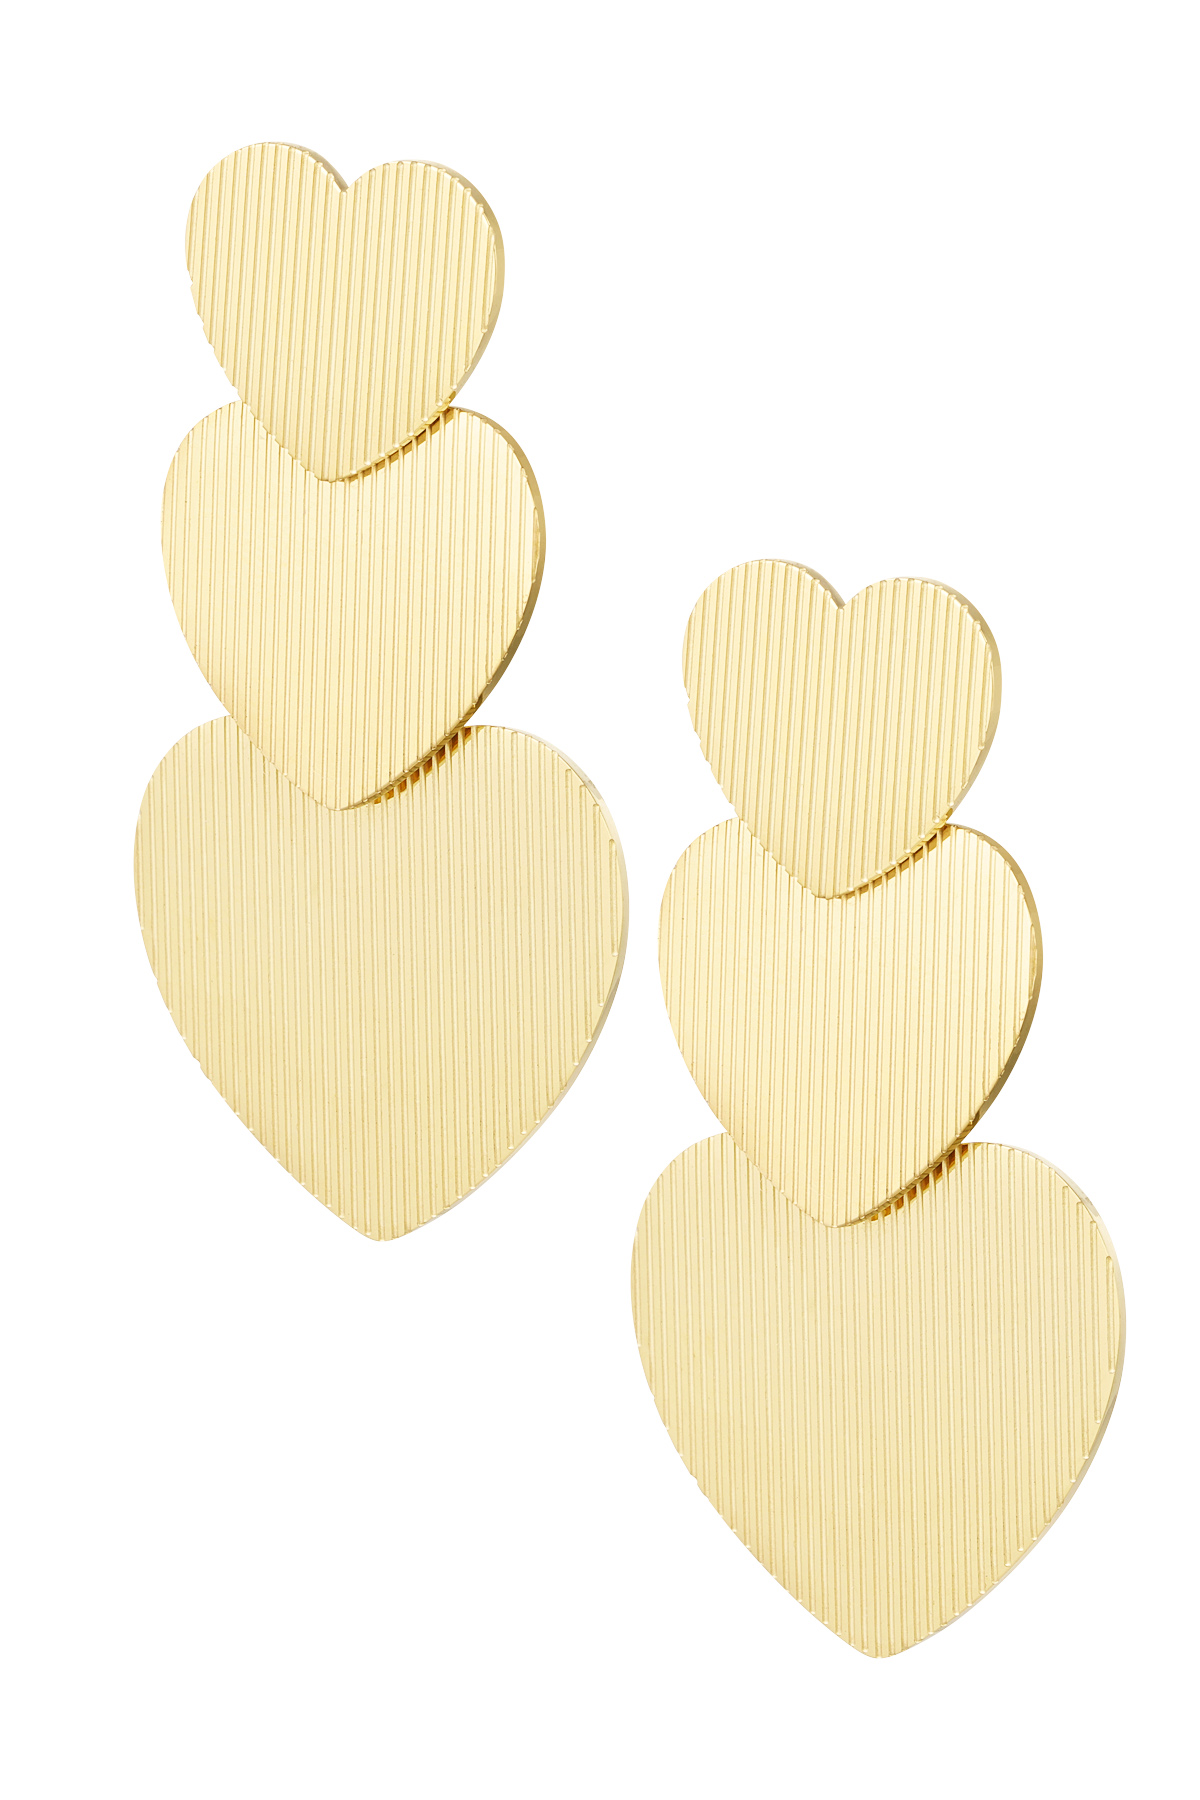 Earrings 3 times heart - gold Stainless Steel 